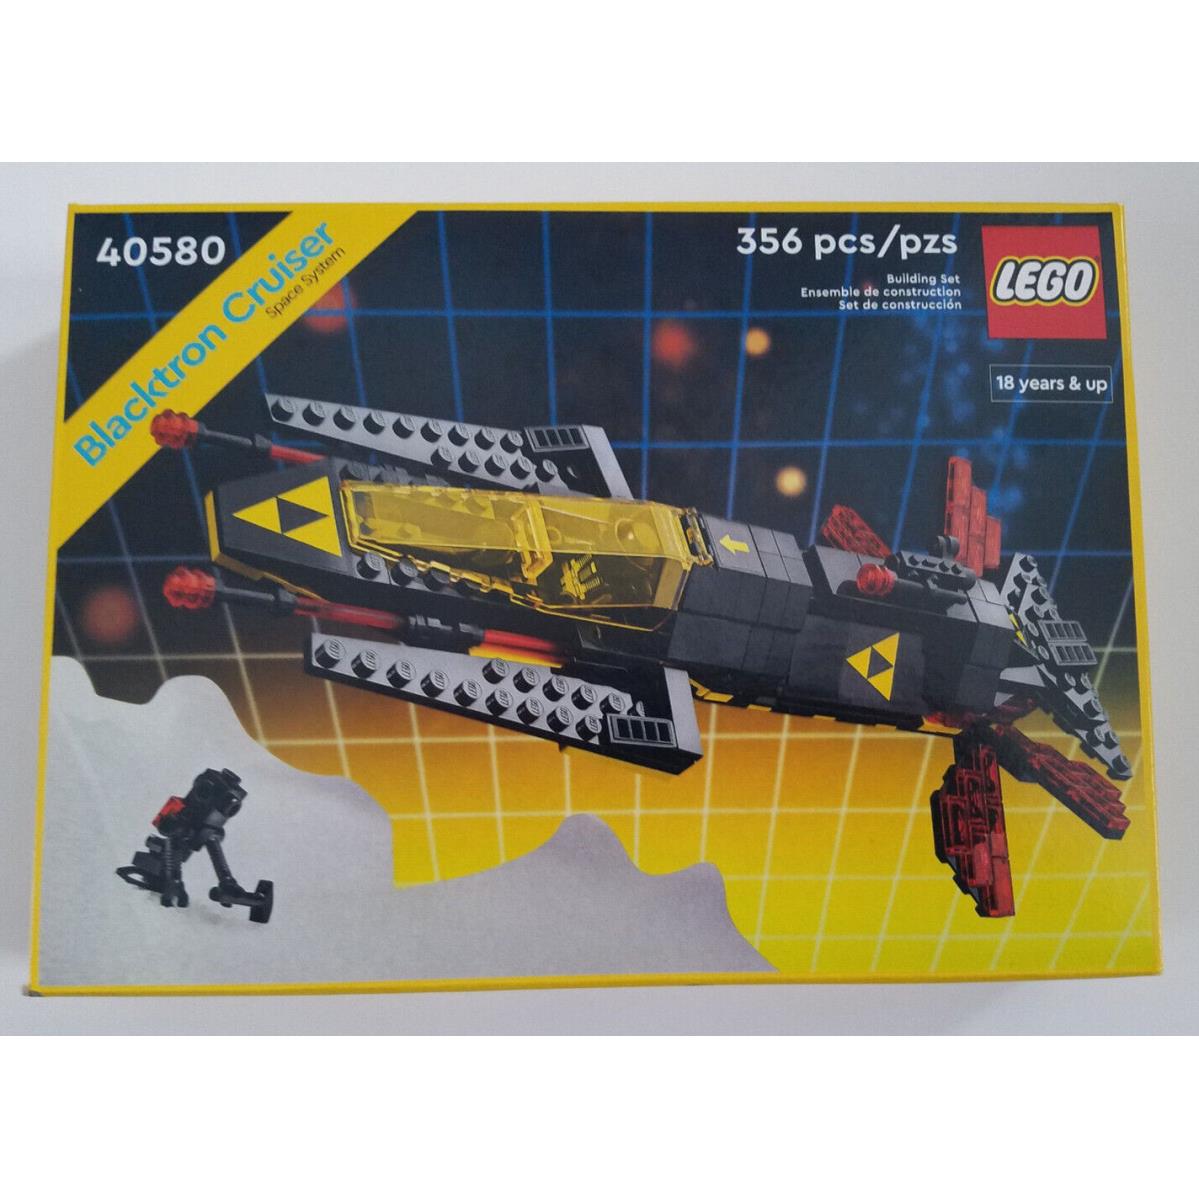 Lego 40580 Blacktron Cruiser Gwp